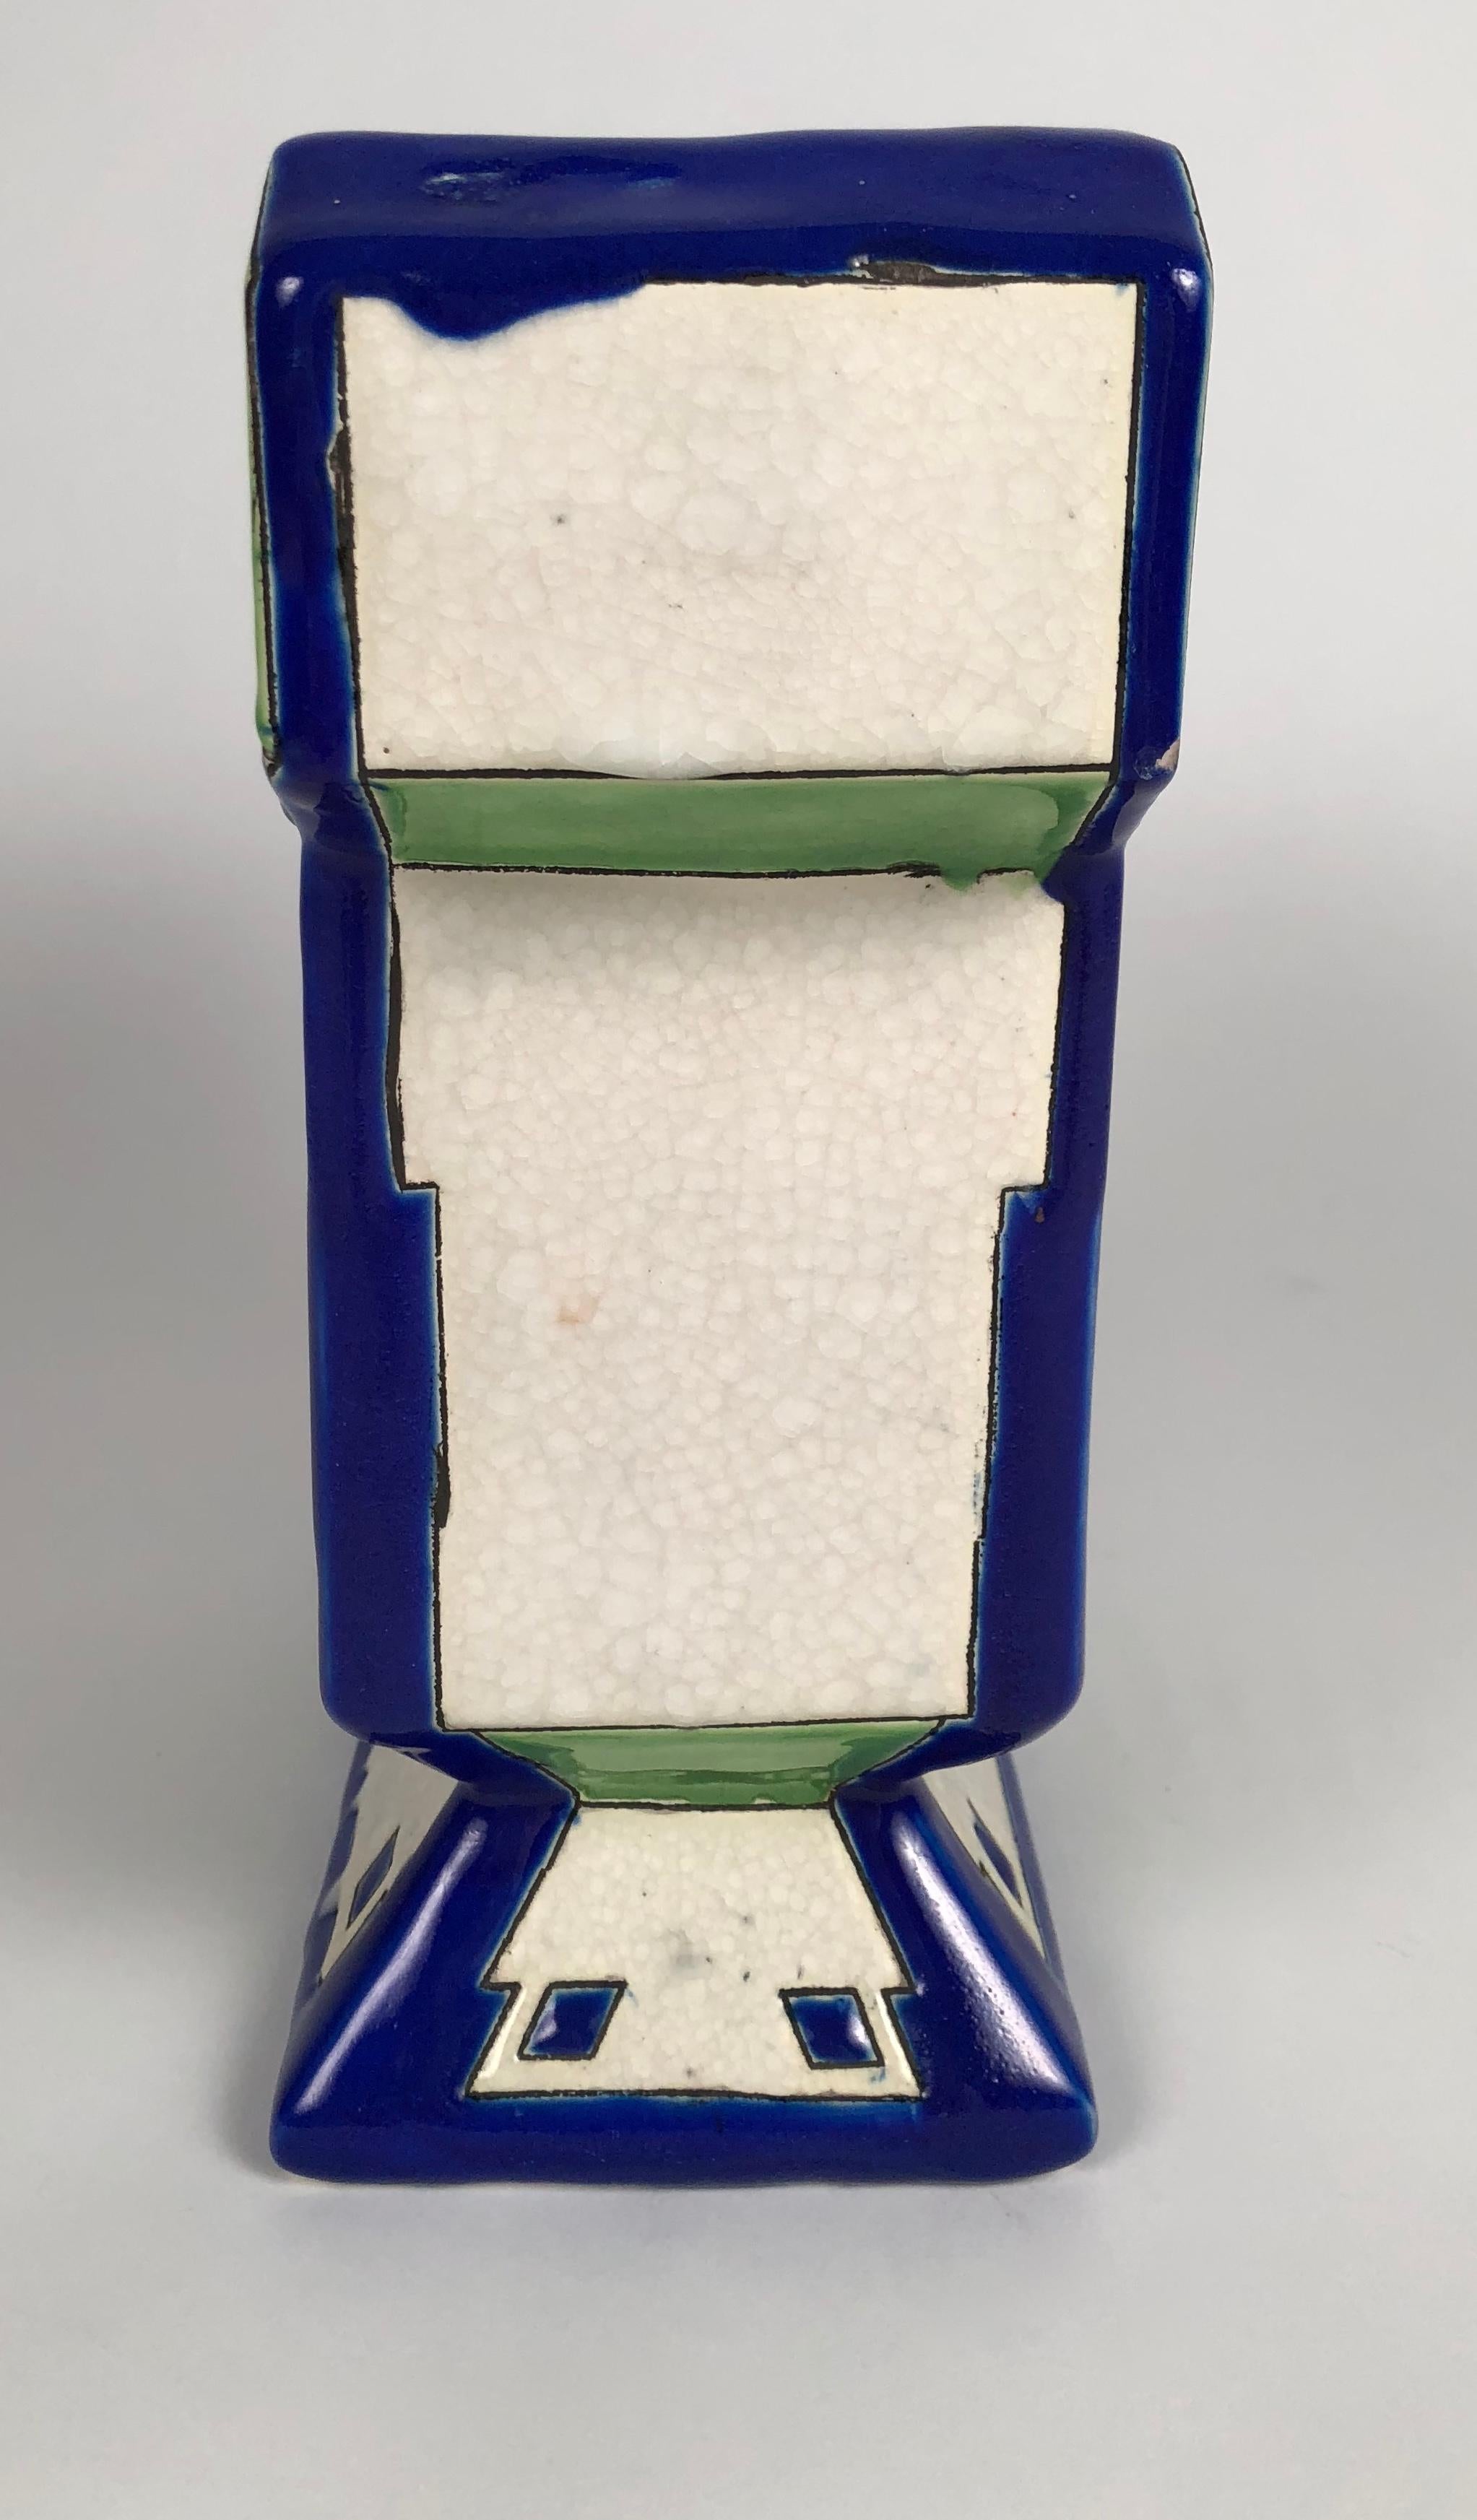 Glazed Art Deco Blue and Green Ceramic Vase by Boch Freres Keramis